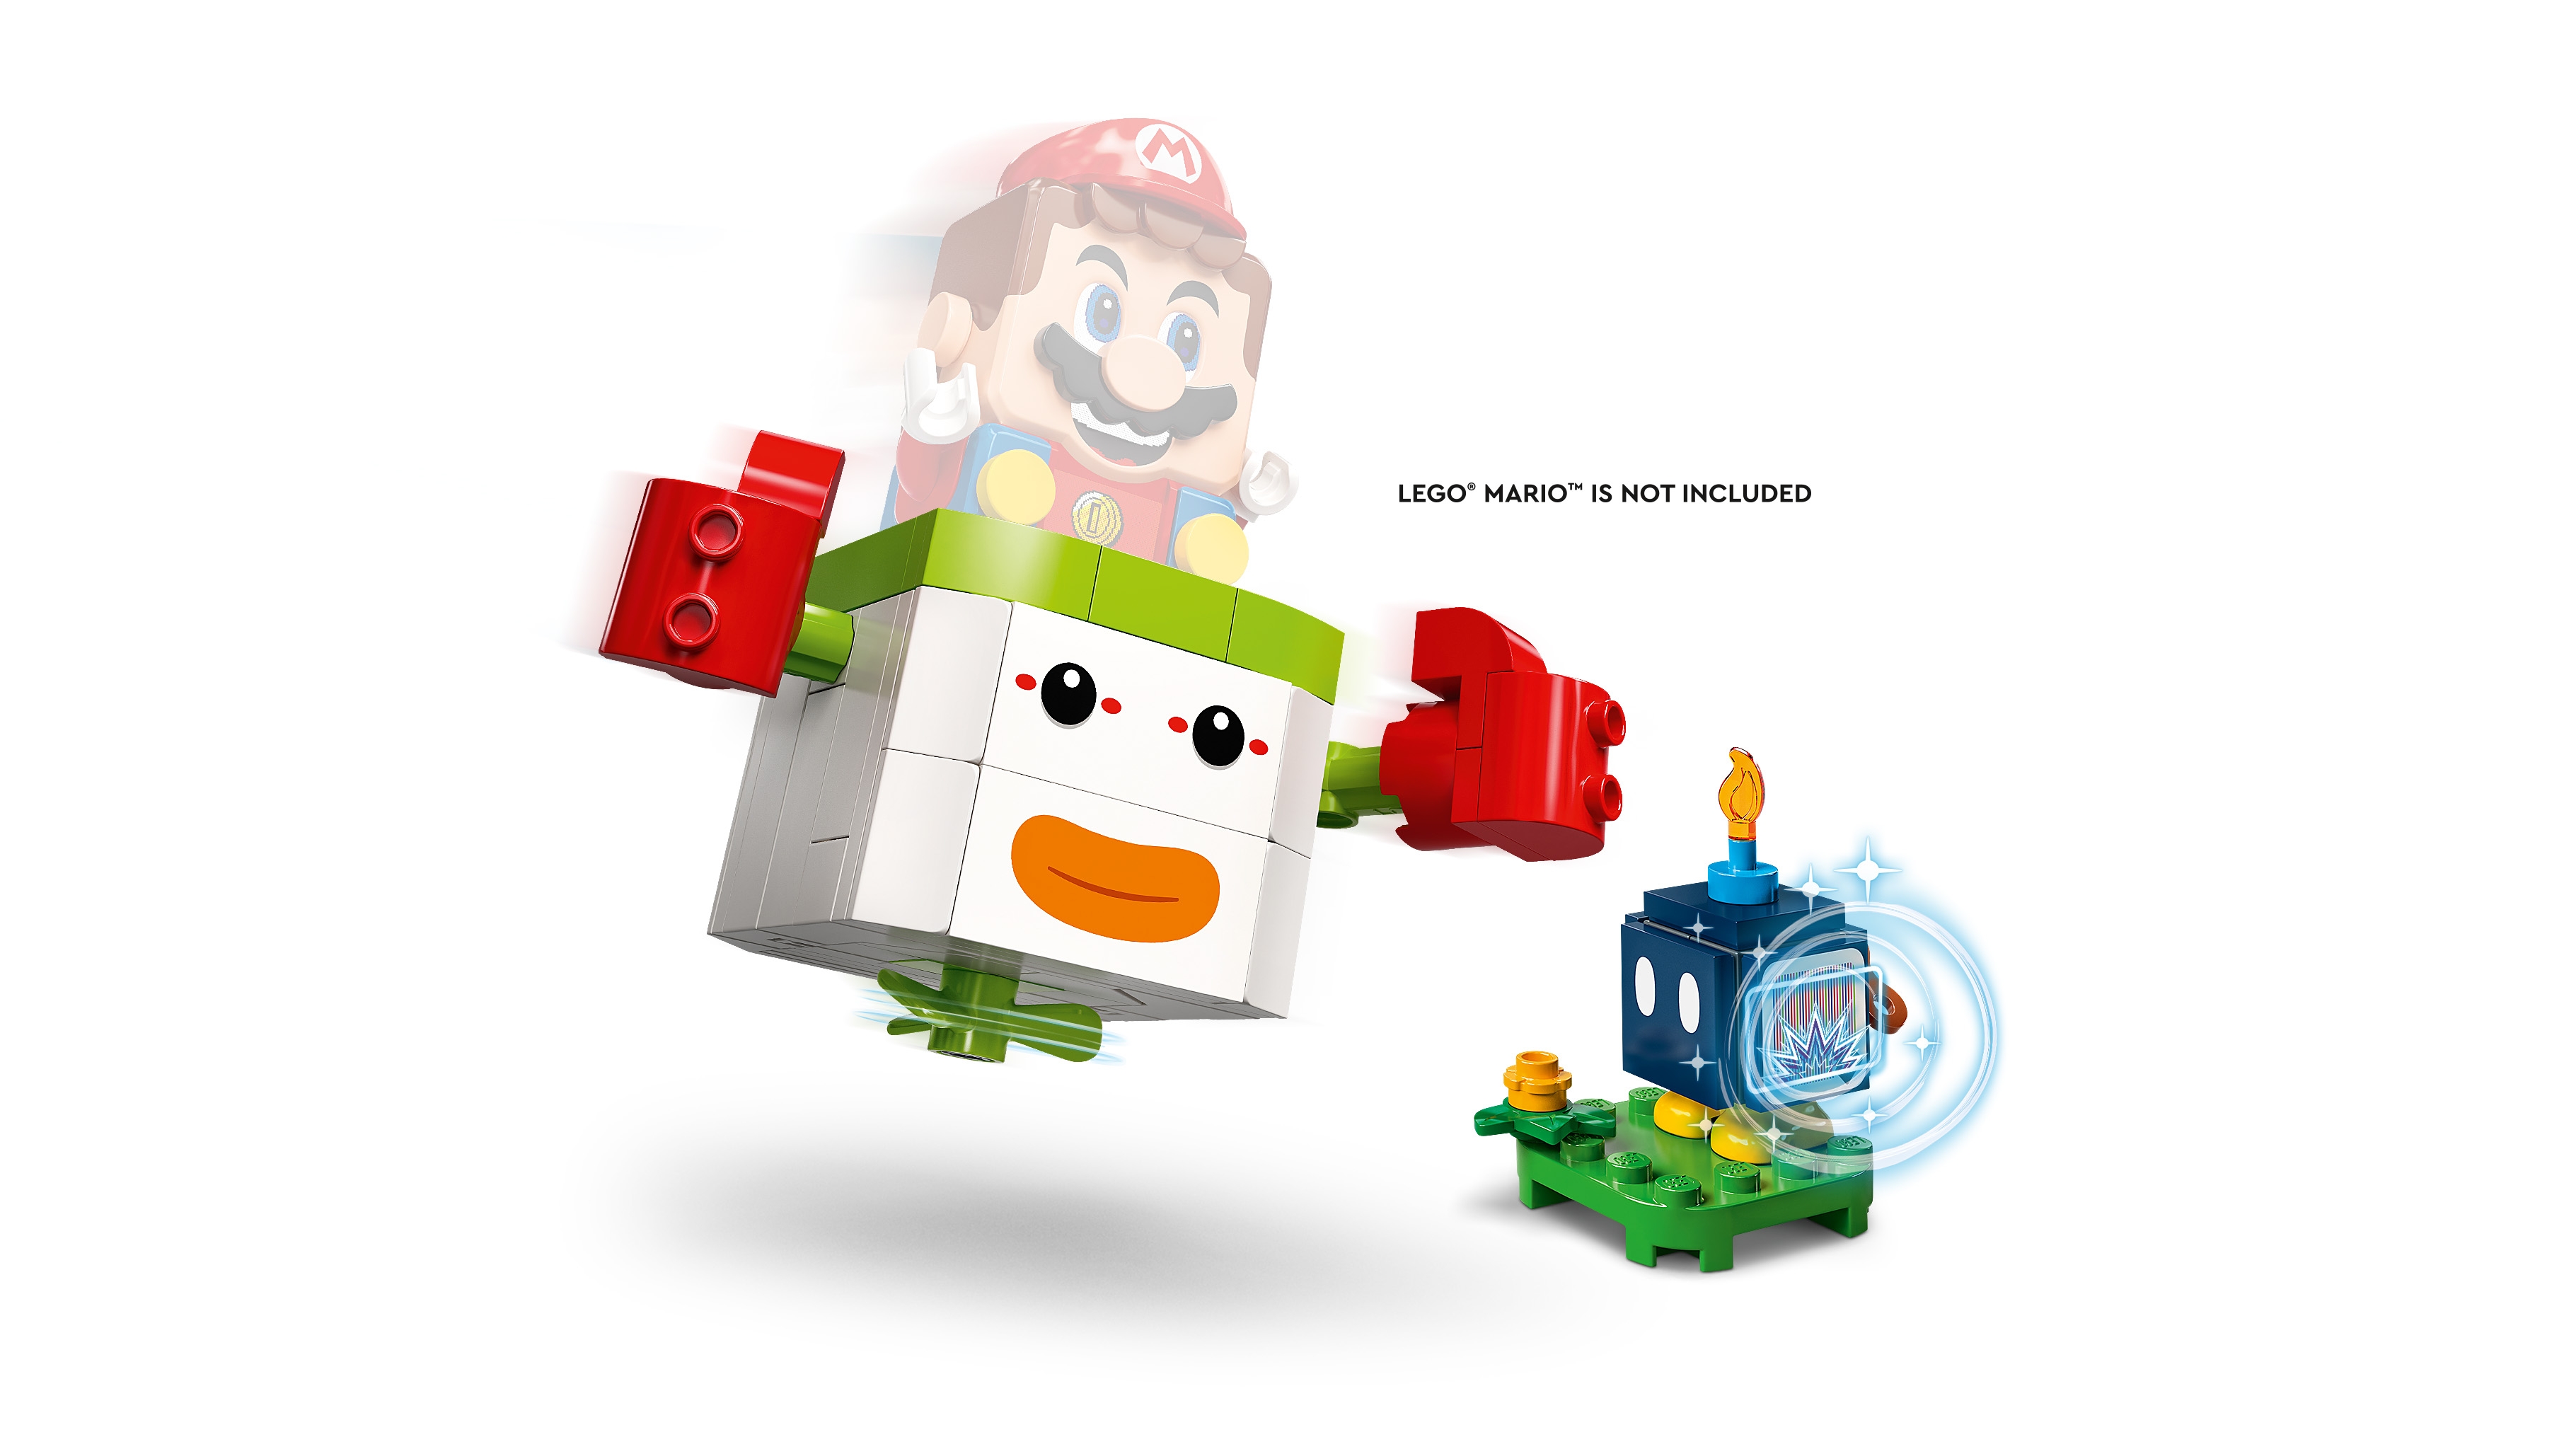 LEGO 71360 - Super Mario - Bowser Jr. - Buildable Mini Figure 